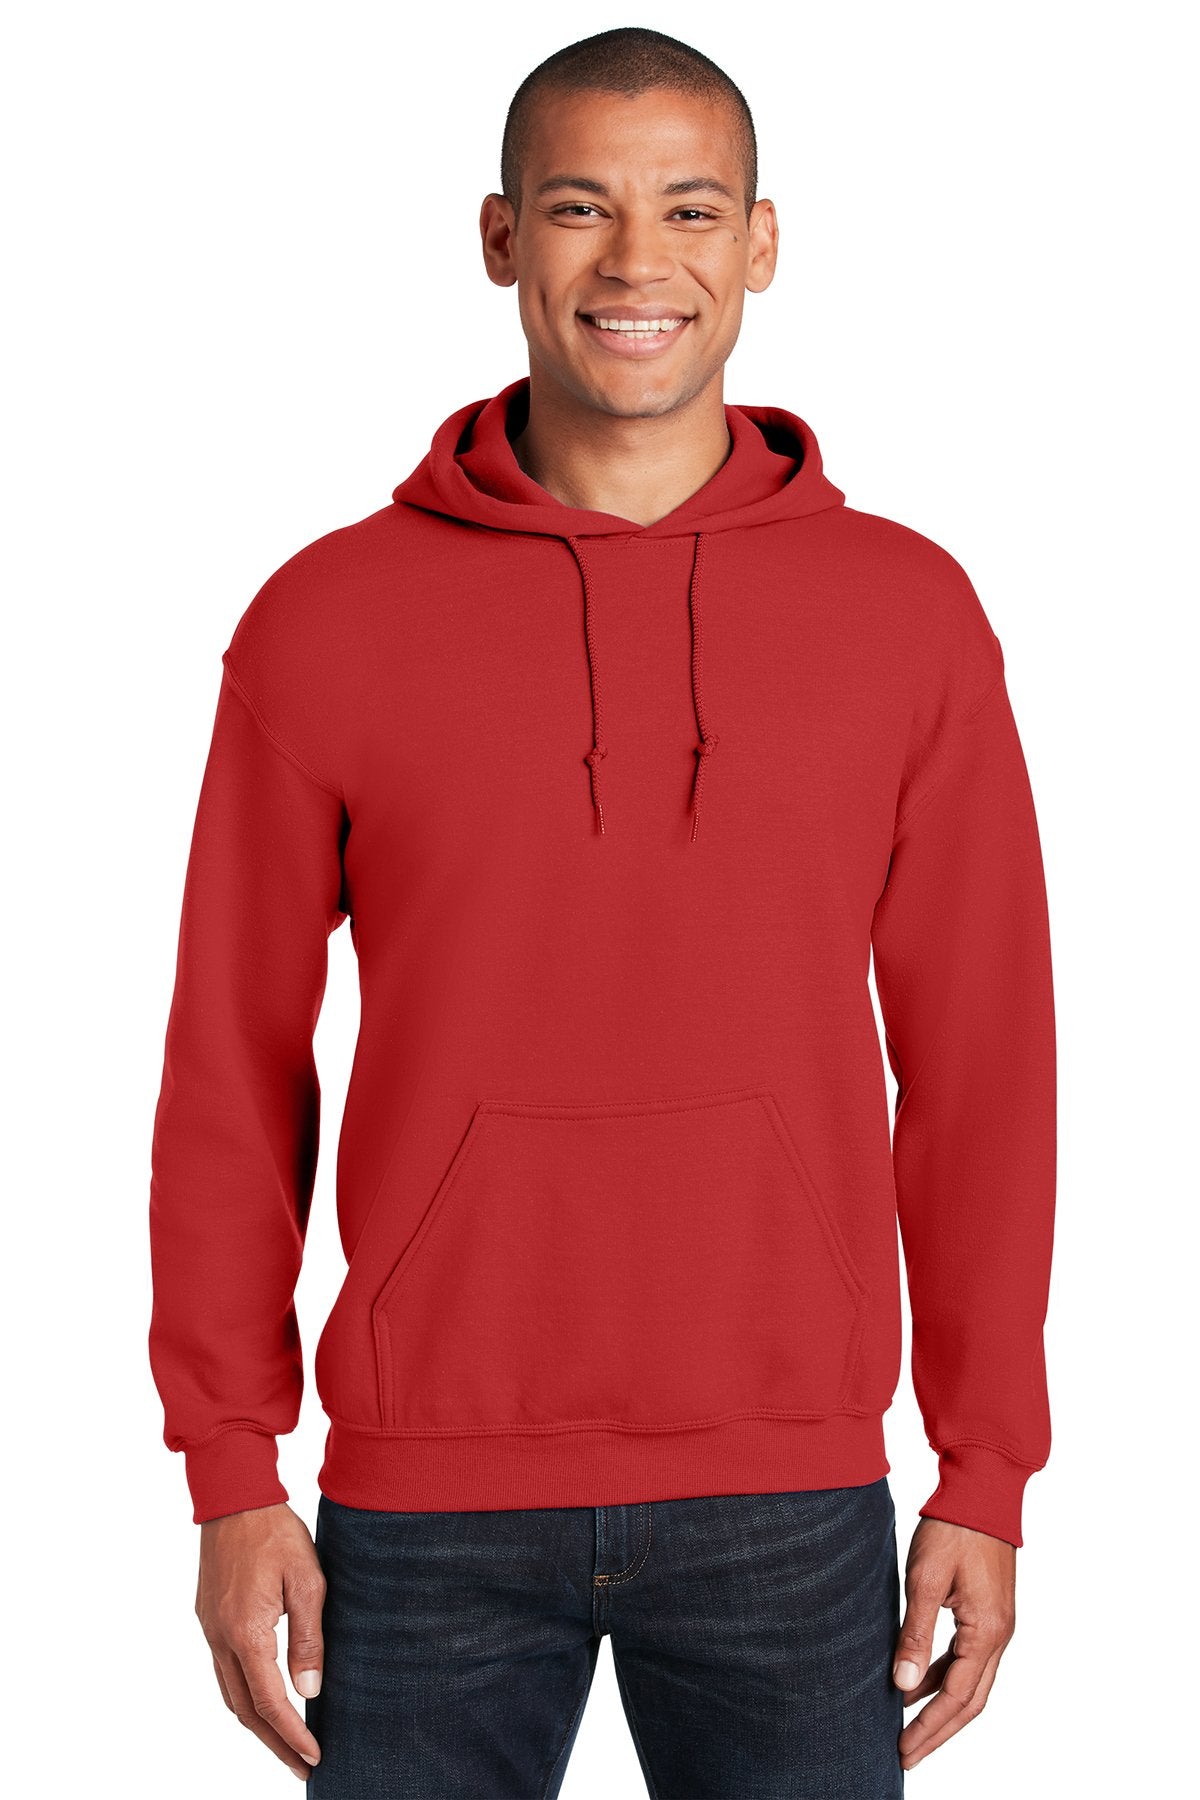 Gildan Red 18500 custom design sweatshirts